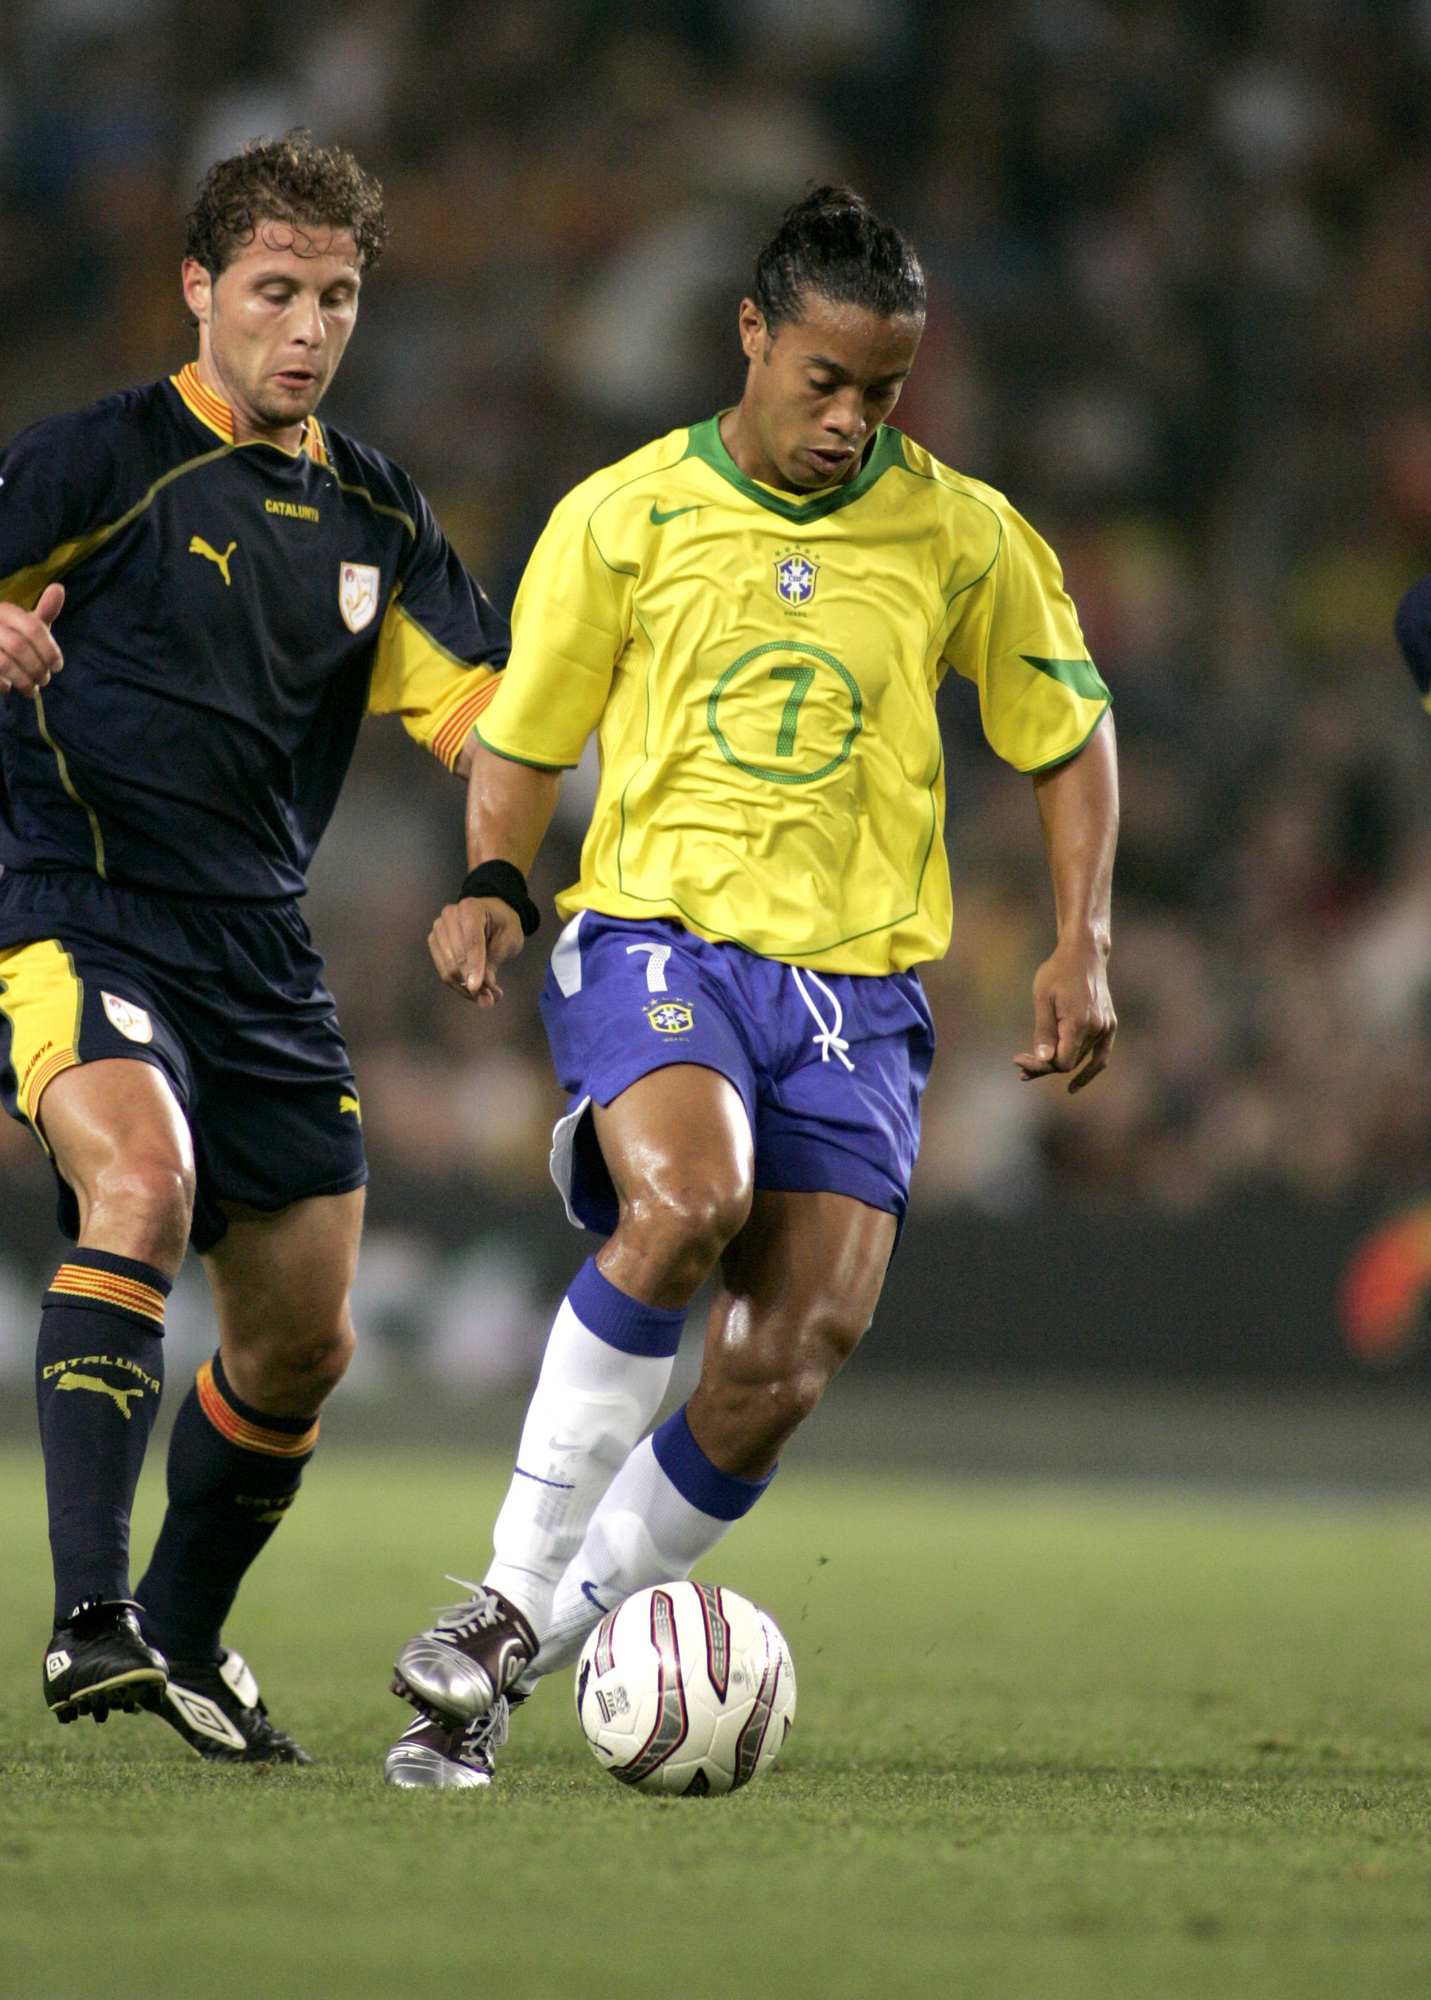 Marcatori brasiliani di Ronaldinho